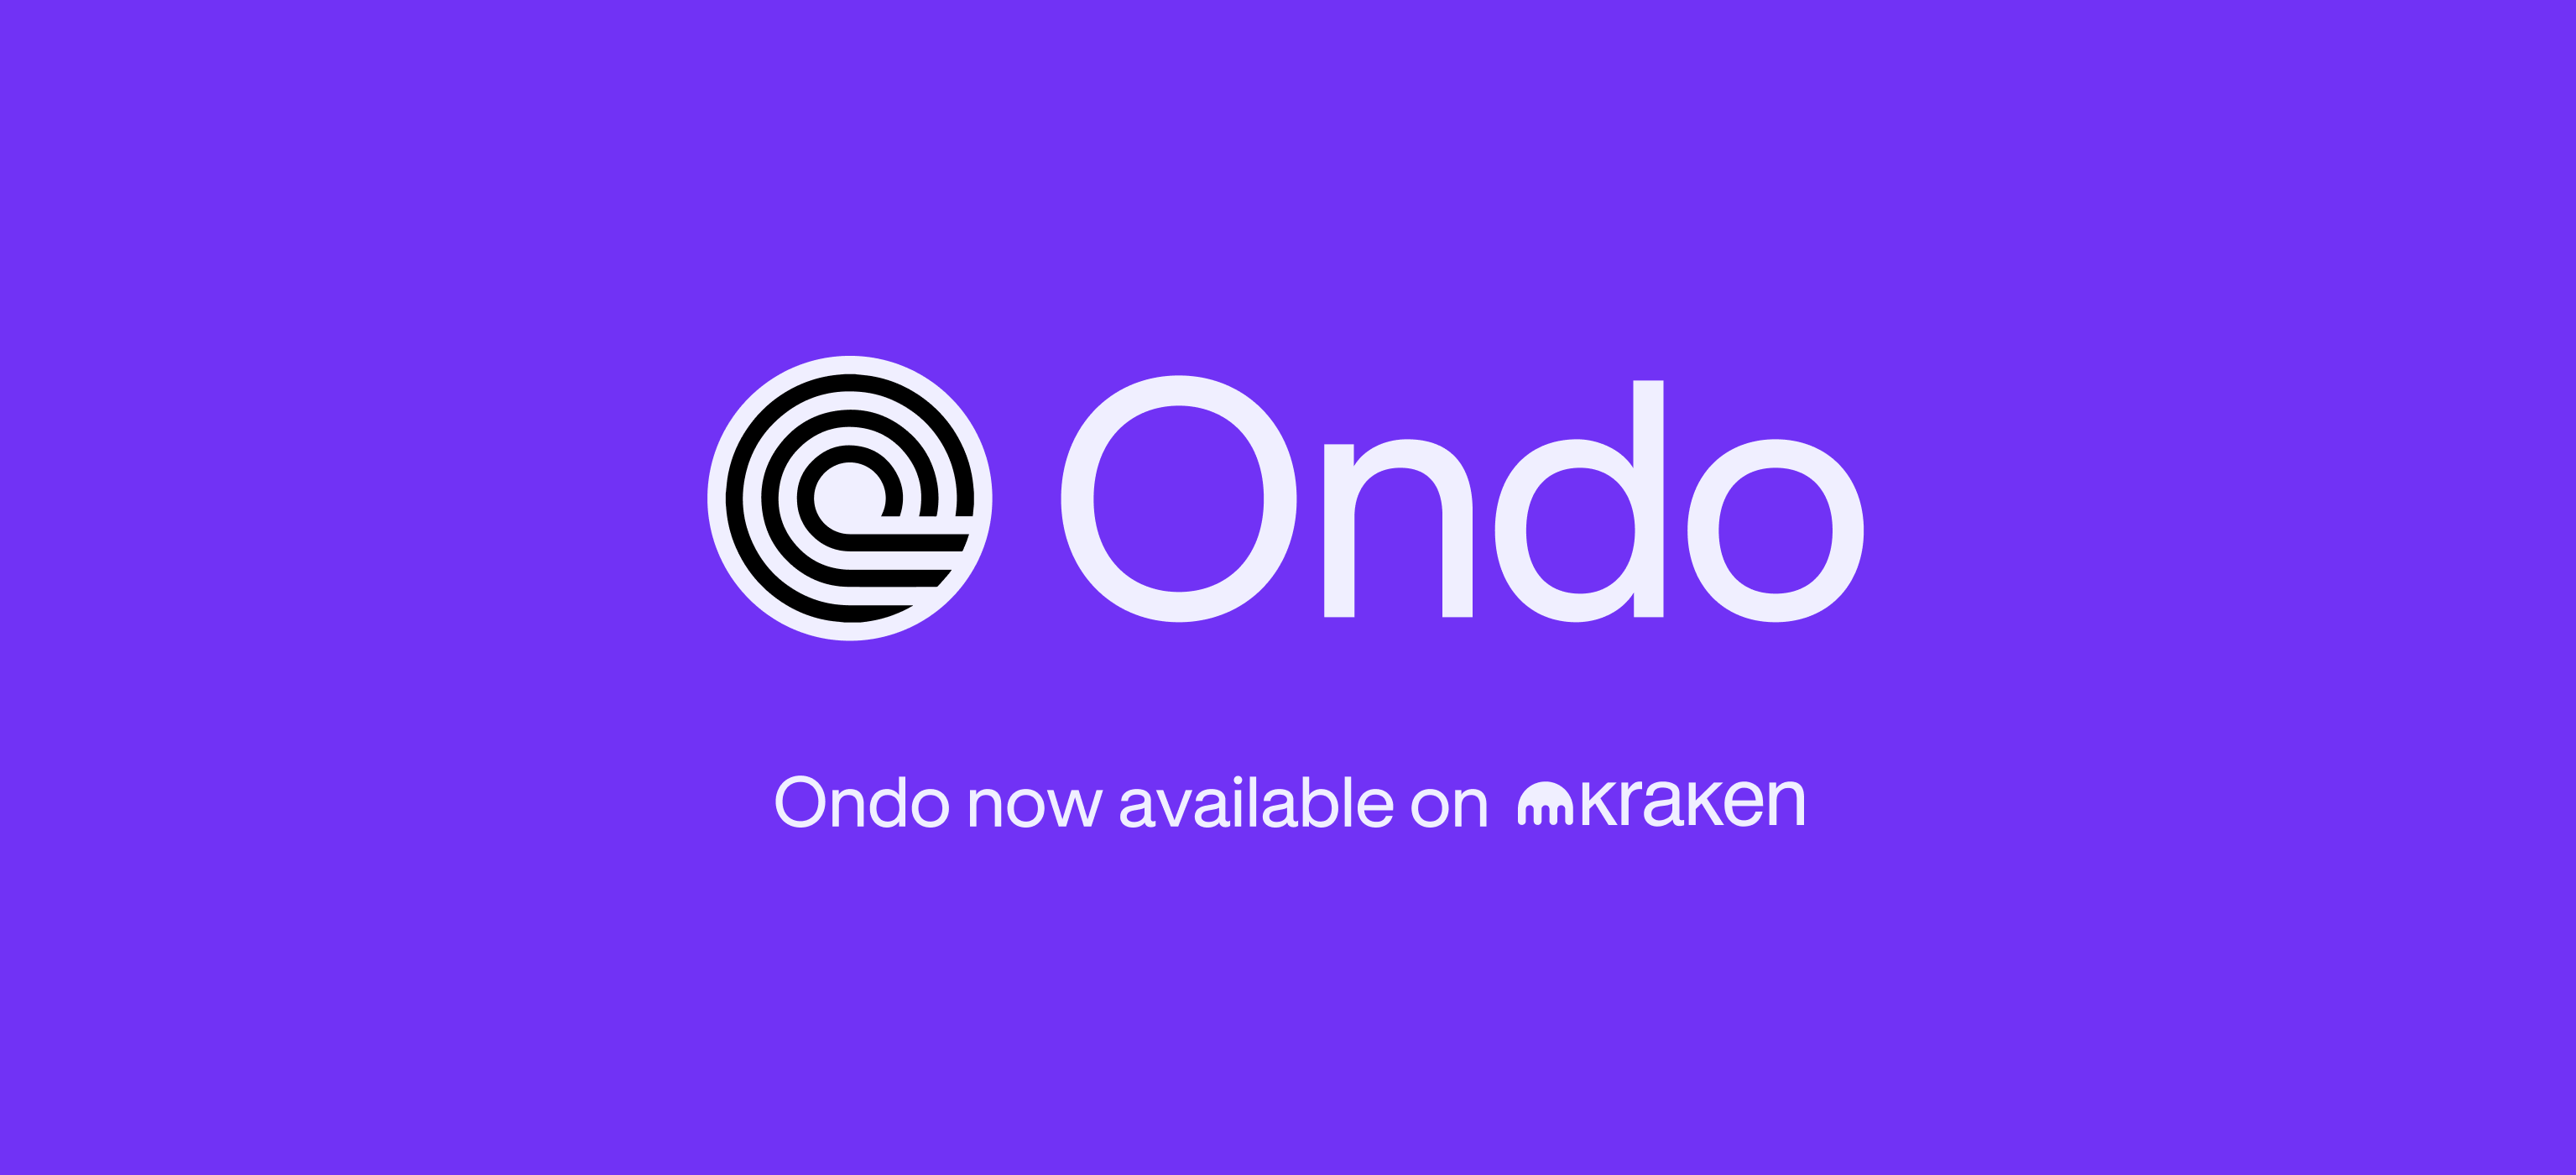 Trading for Ondo (ONDO) starts April 11 - deposit now